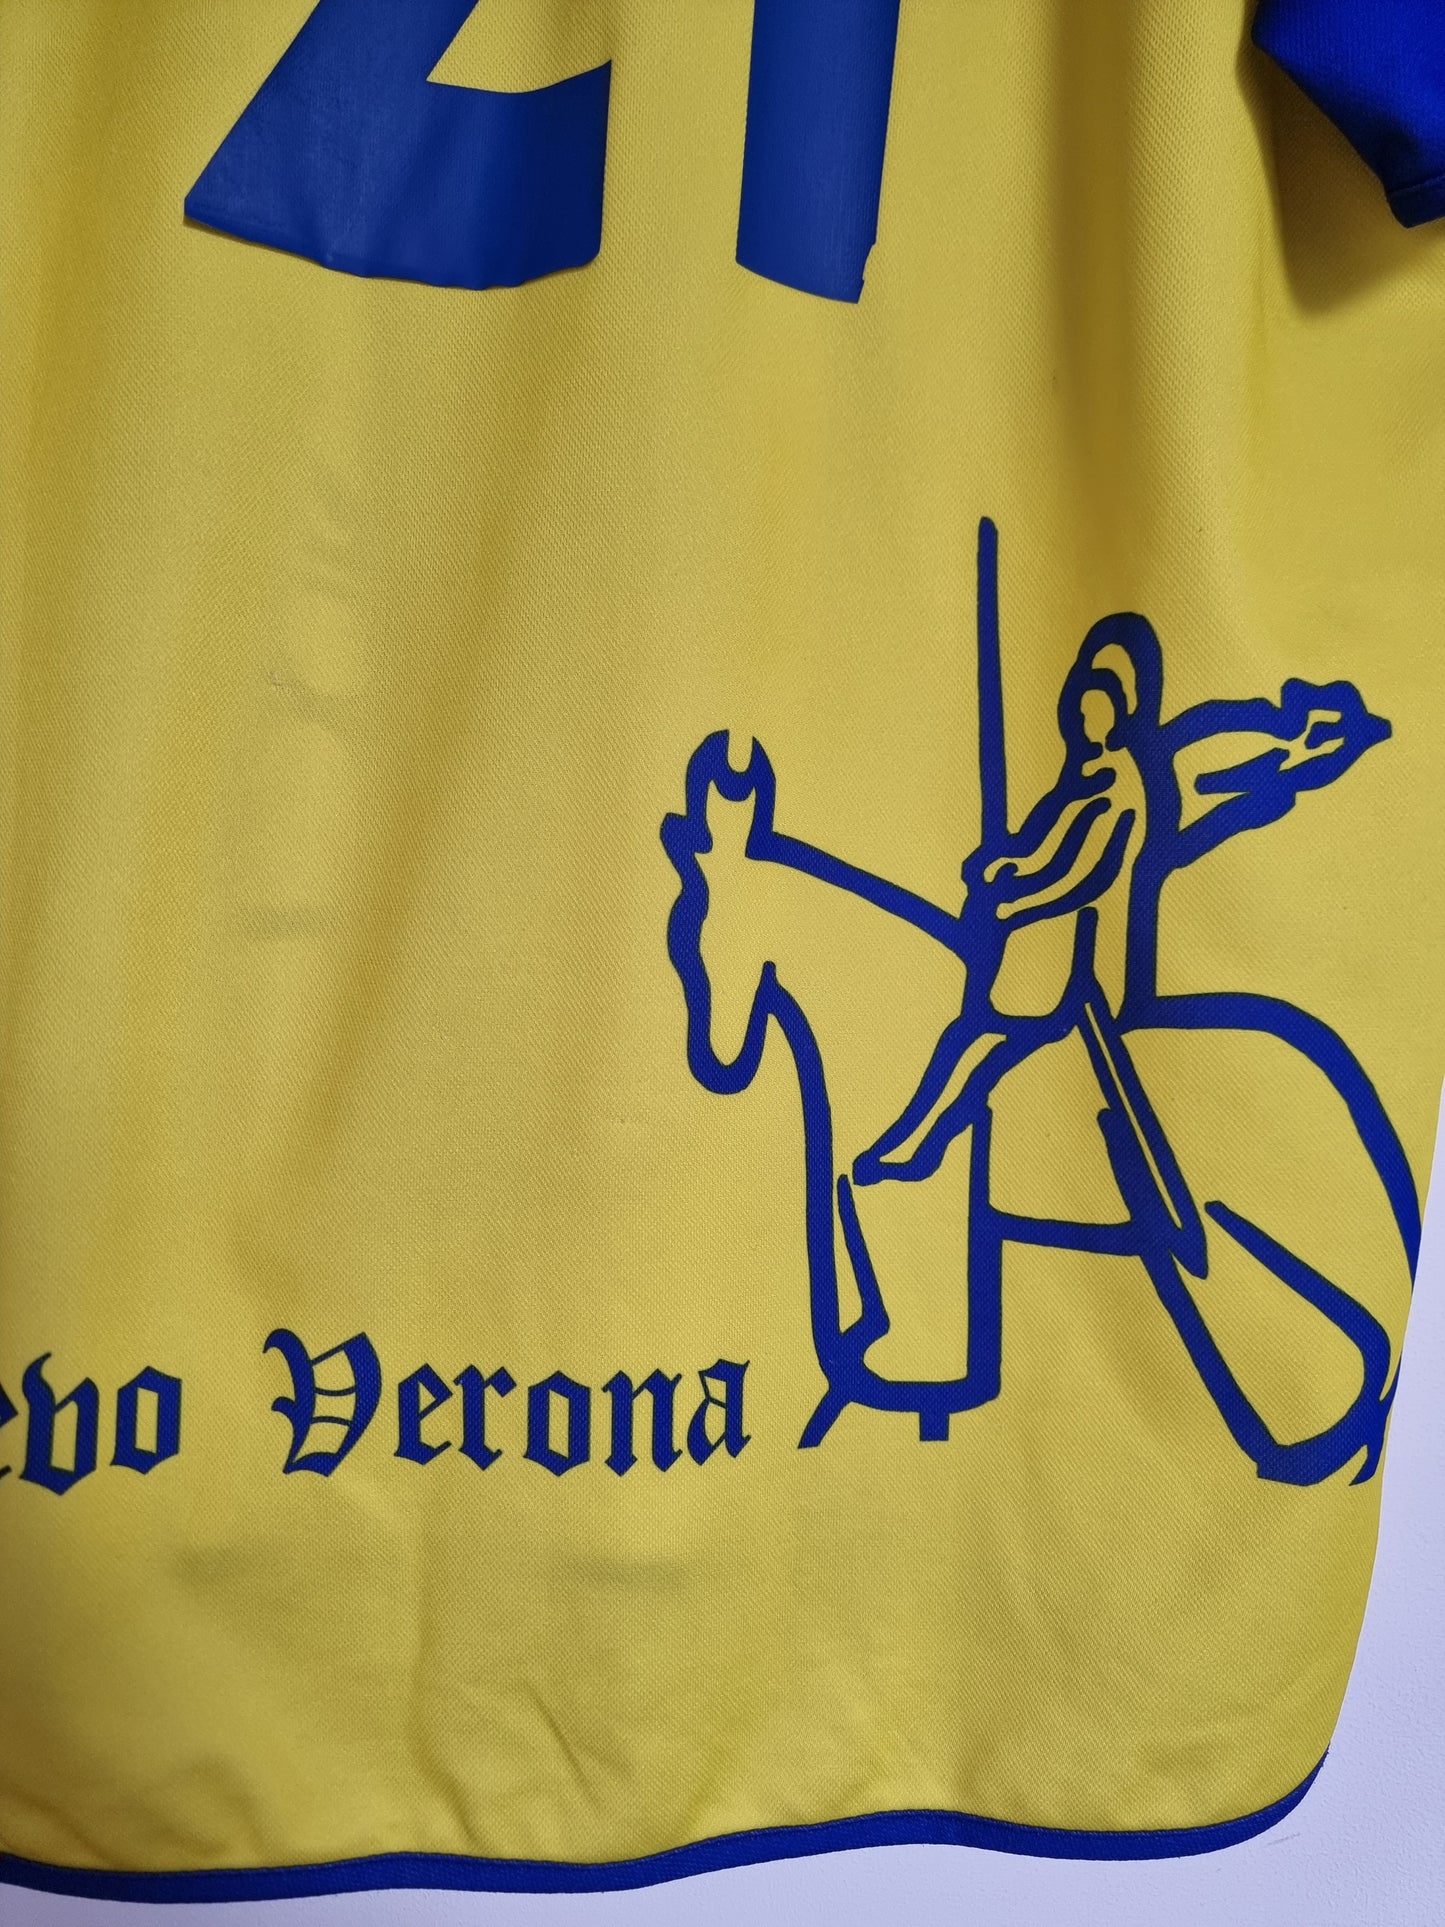 Joma Chievo Verona 02/03 'Bierhoff 21' Player Issue Home XL